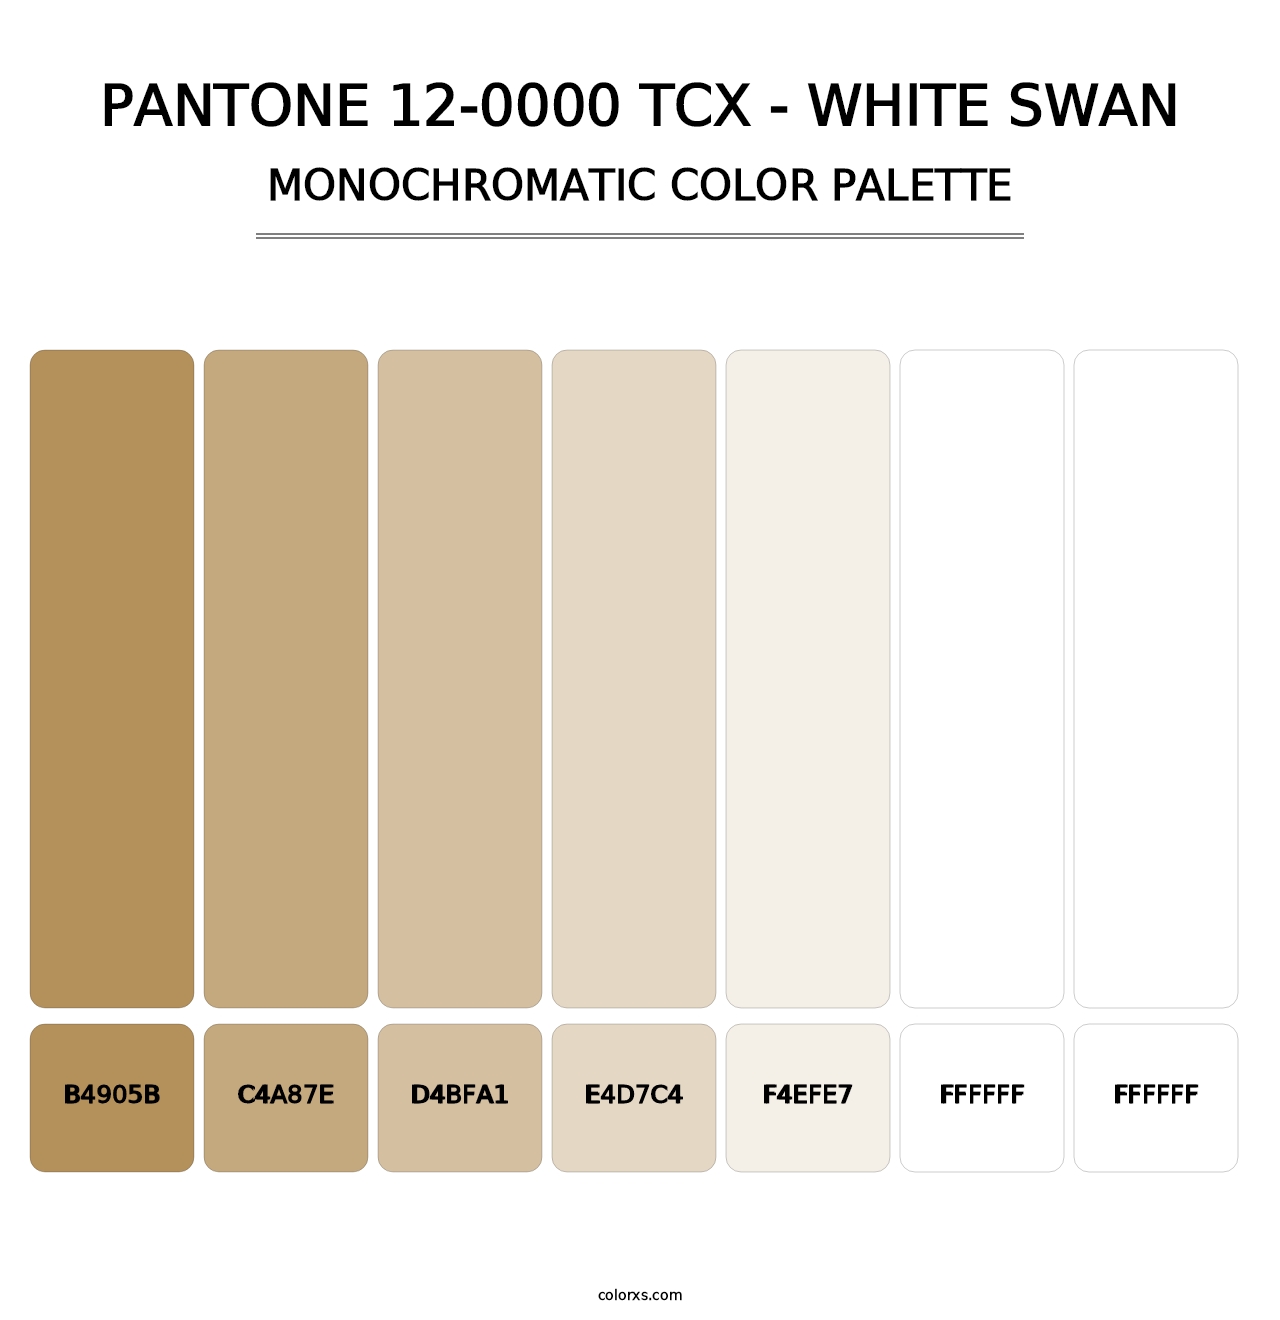 PANTONE 12-0000 TCX - White Swan - Monochromatic Color Palette